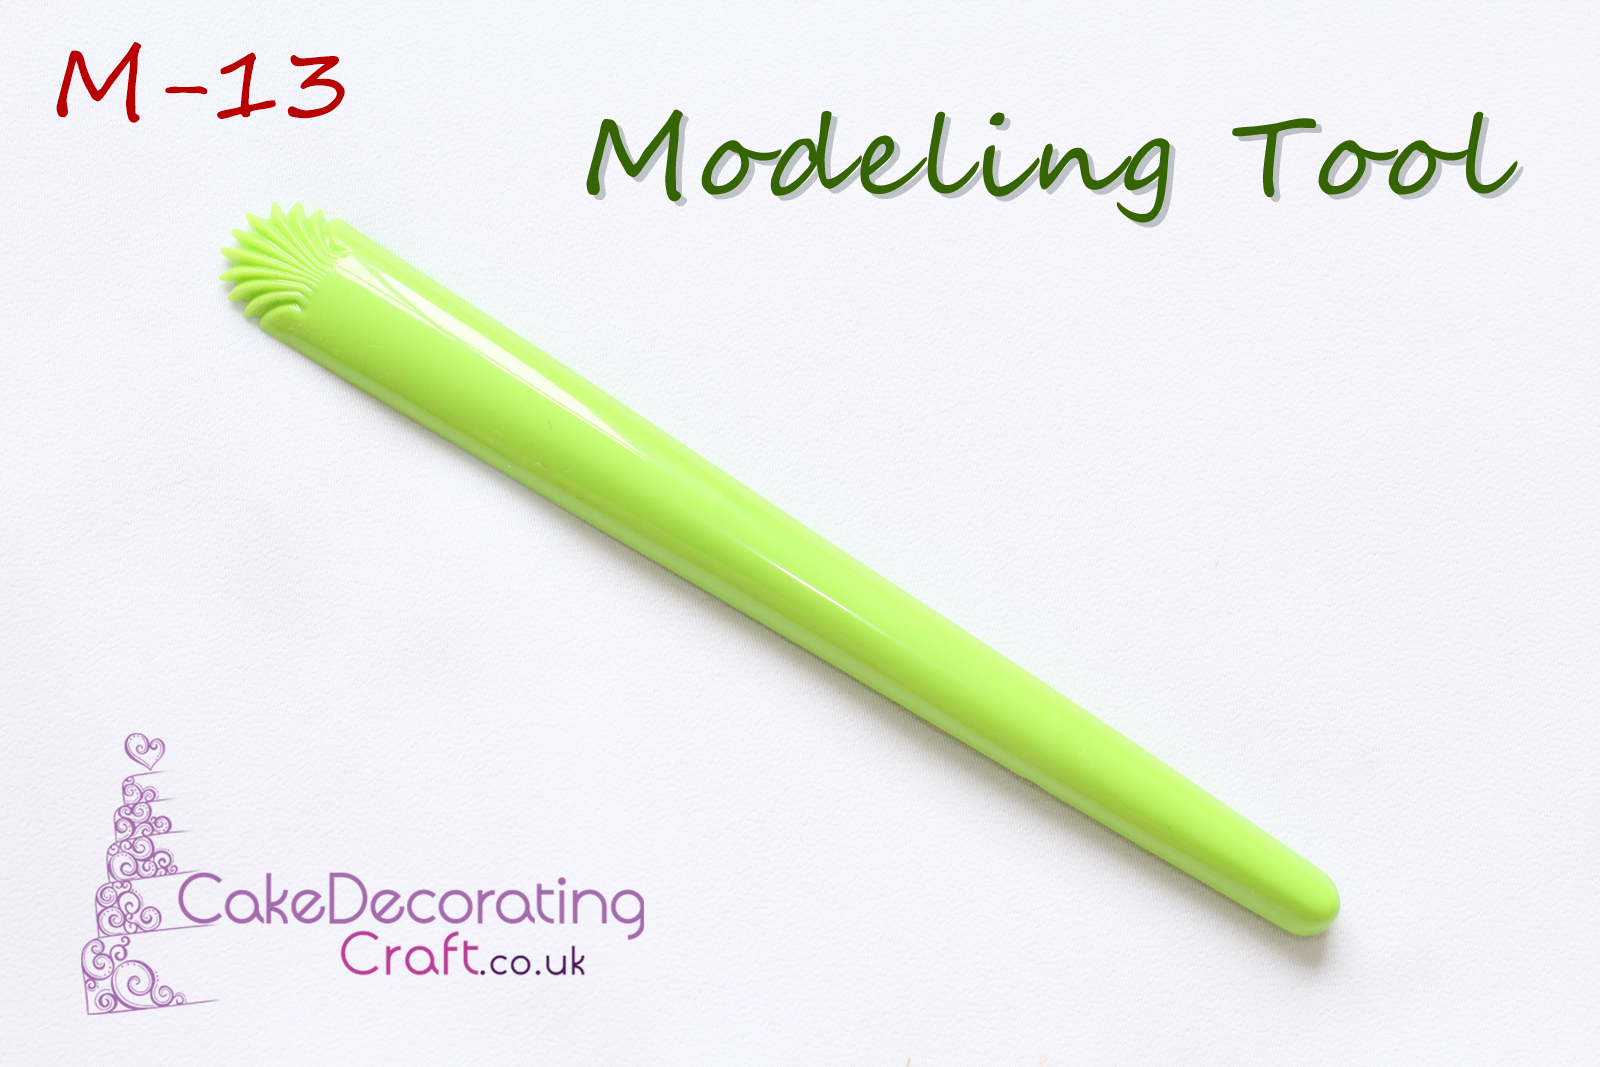 Cake Decorating Craft Modelling Tools | Double Ended | Gum Paste Flower Paste Modelling Sugar Paste Craft | M-13